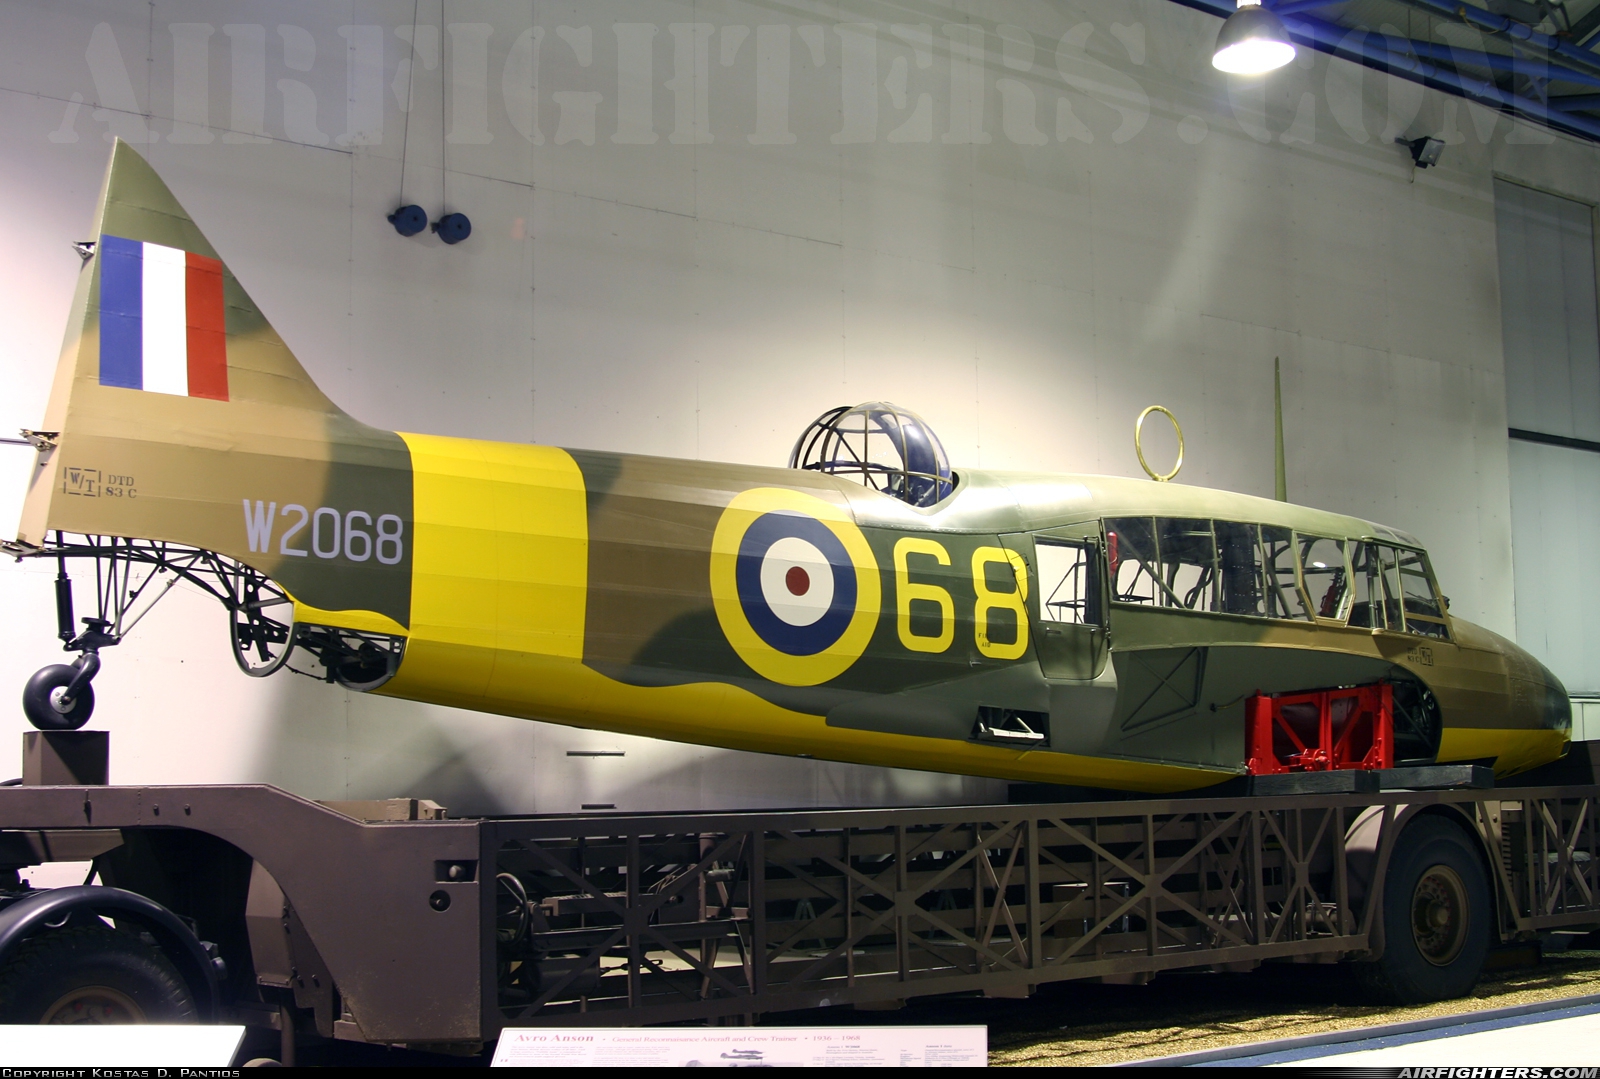 UK - Air Force Avro 652 Anson I W2068 at Hendon, UK